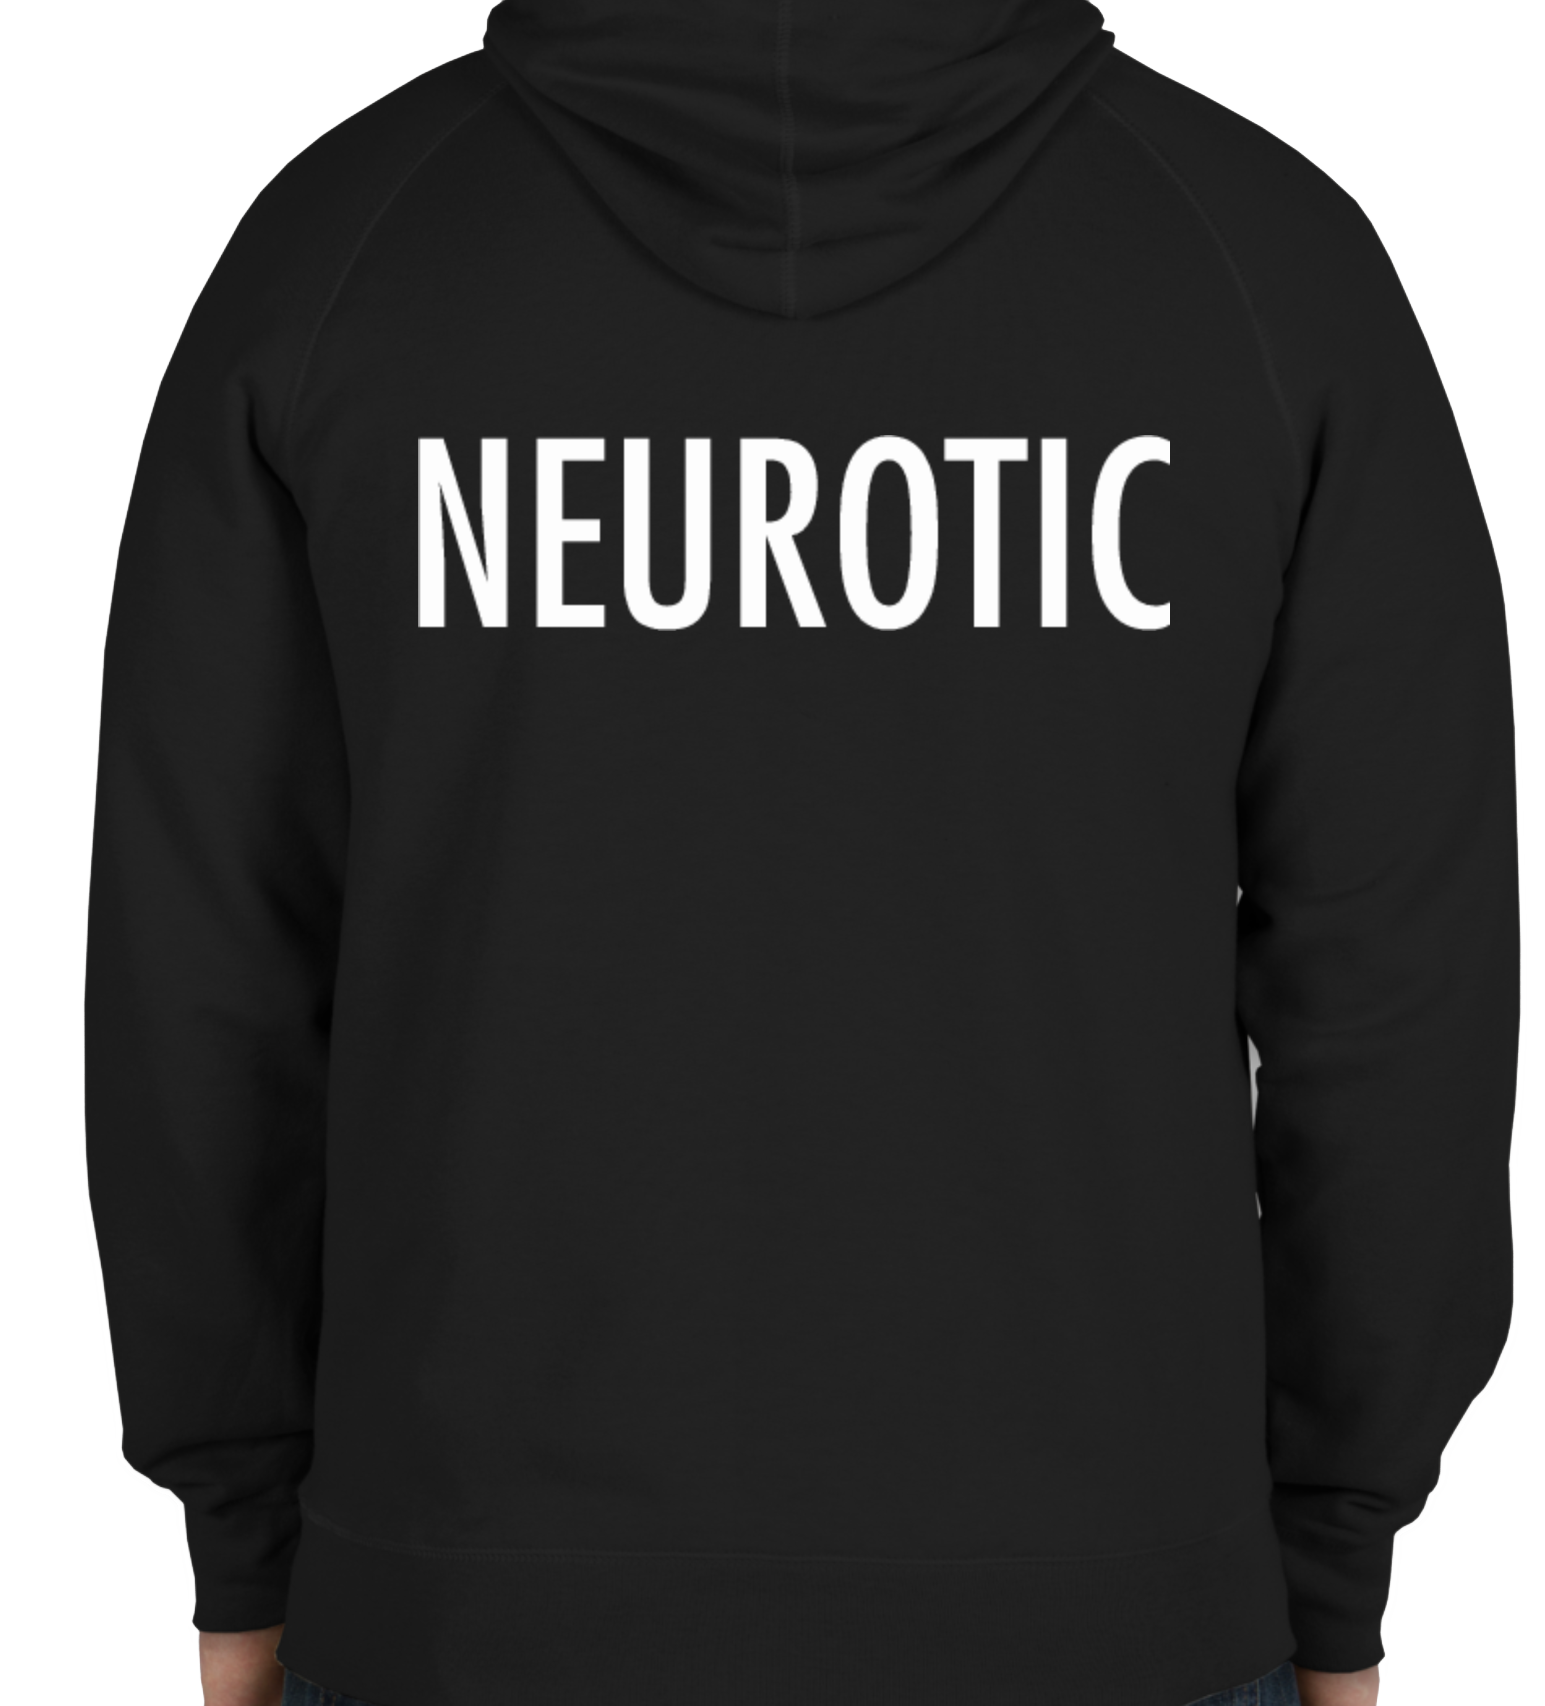 Neurotic Sweatshirt - $19.99